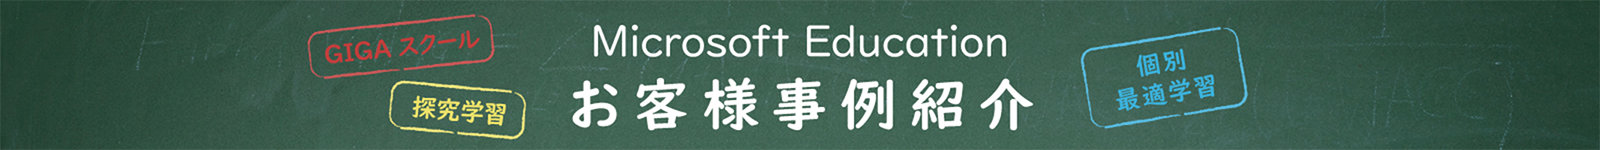 Microsoft Education お客様事例紹介 GIGA スクール 探究学習 個別 最適学習